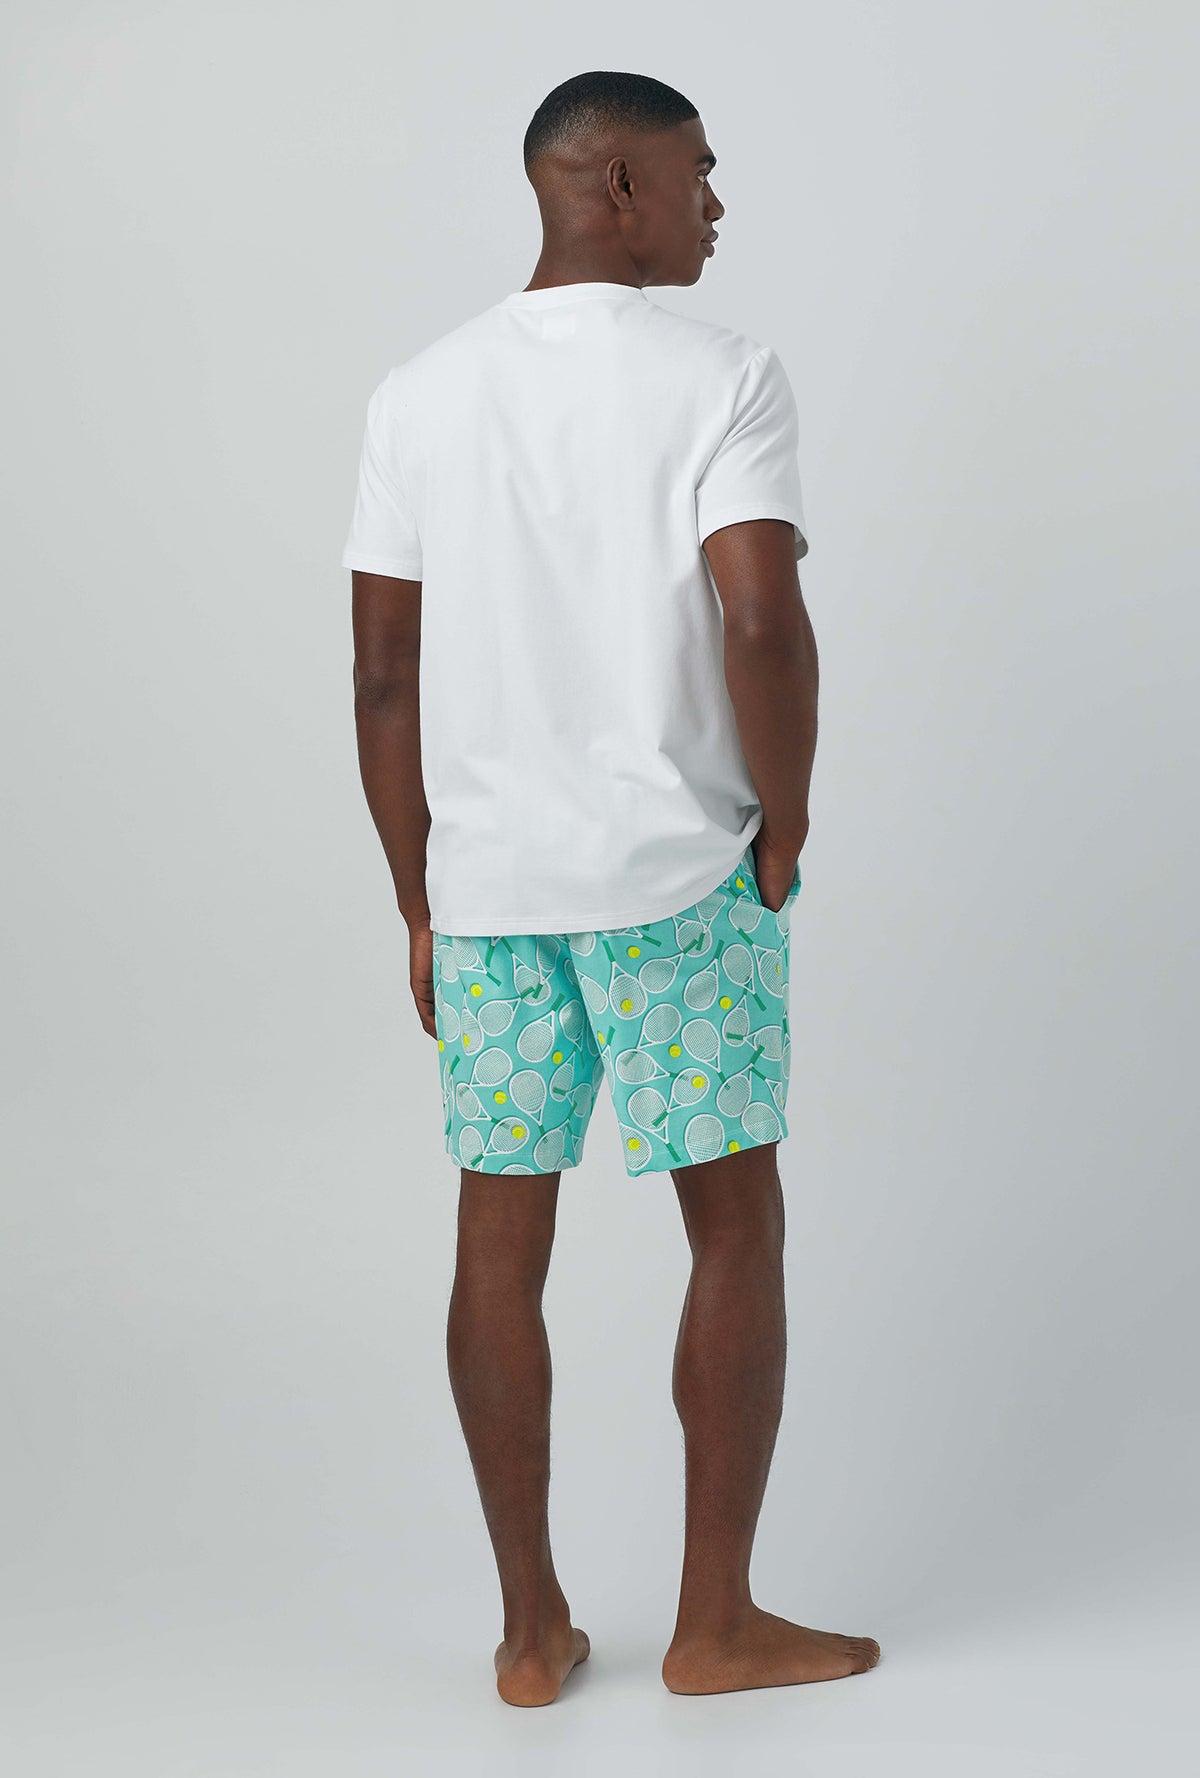 A man wearing green Short Sleeve Henley Stretch Jersey PJ Set with Tennis Club print